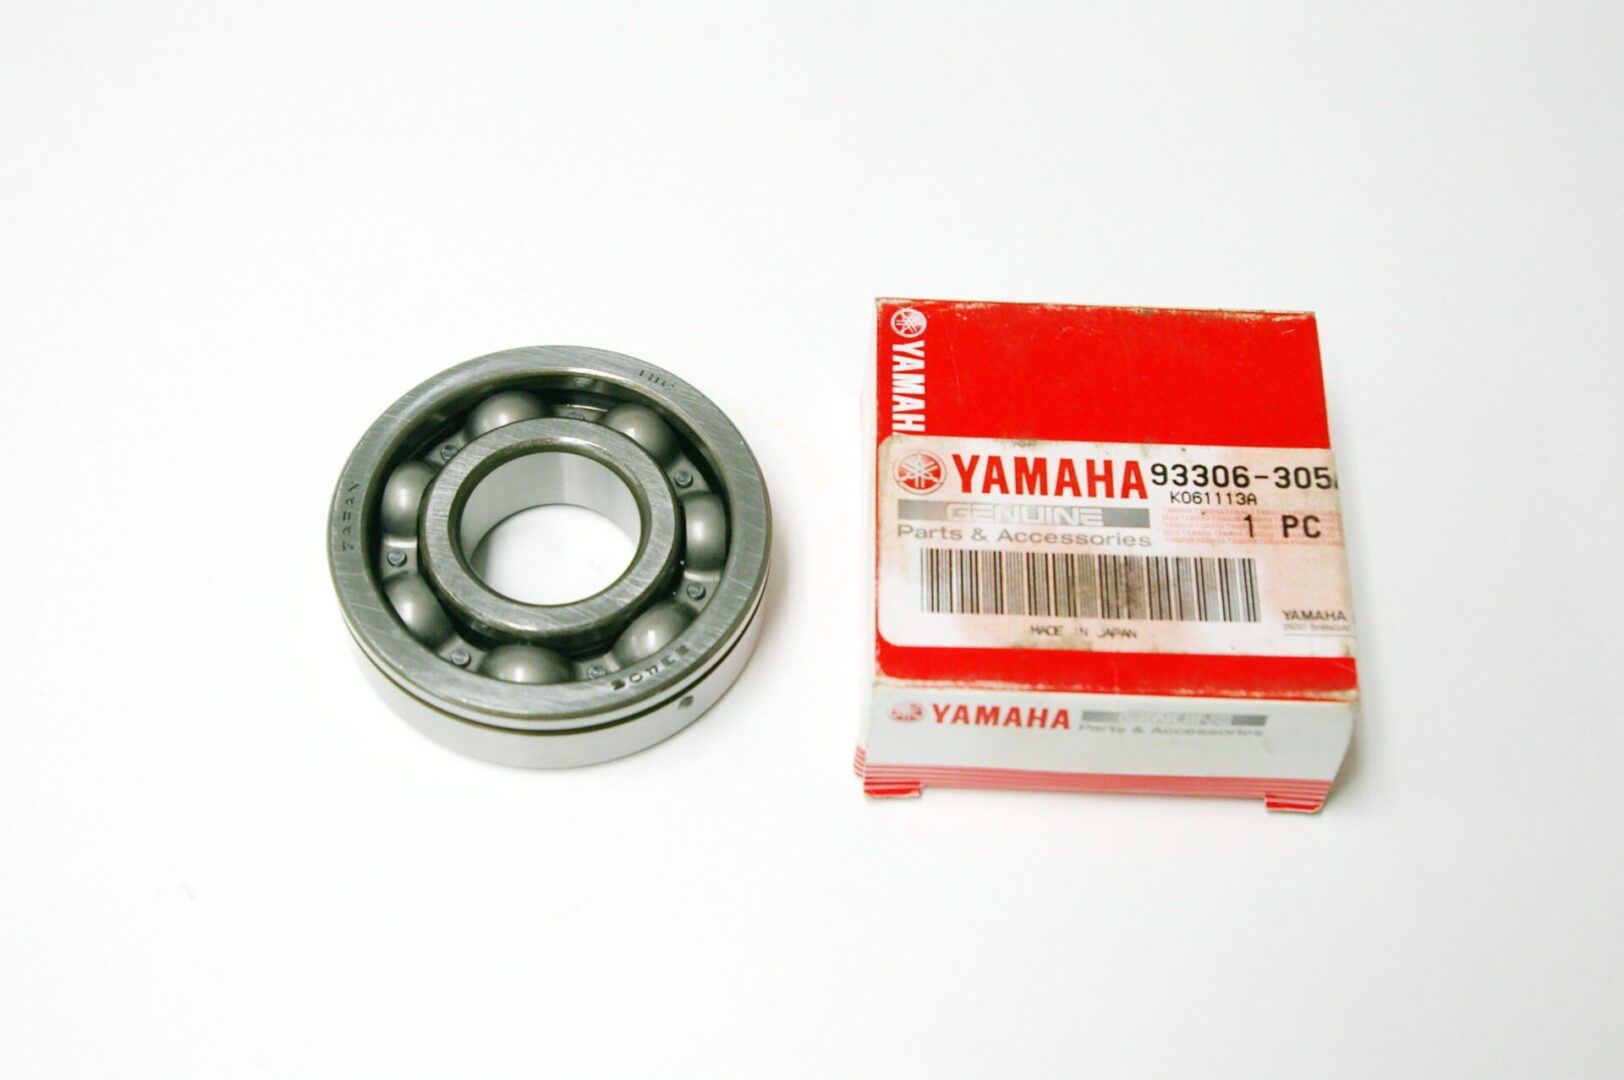 A OEM Yamaha Crankshaft Bearing clutch side and bearing box on a white background.